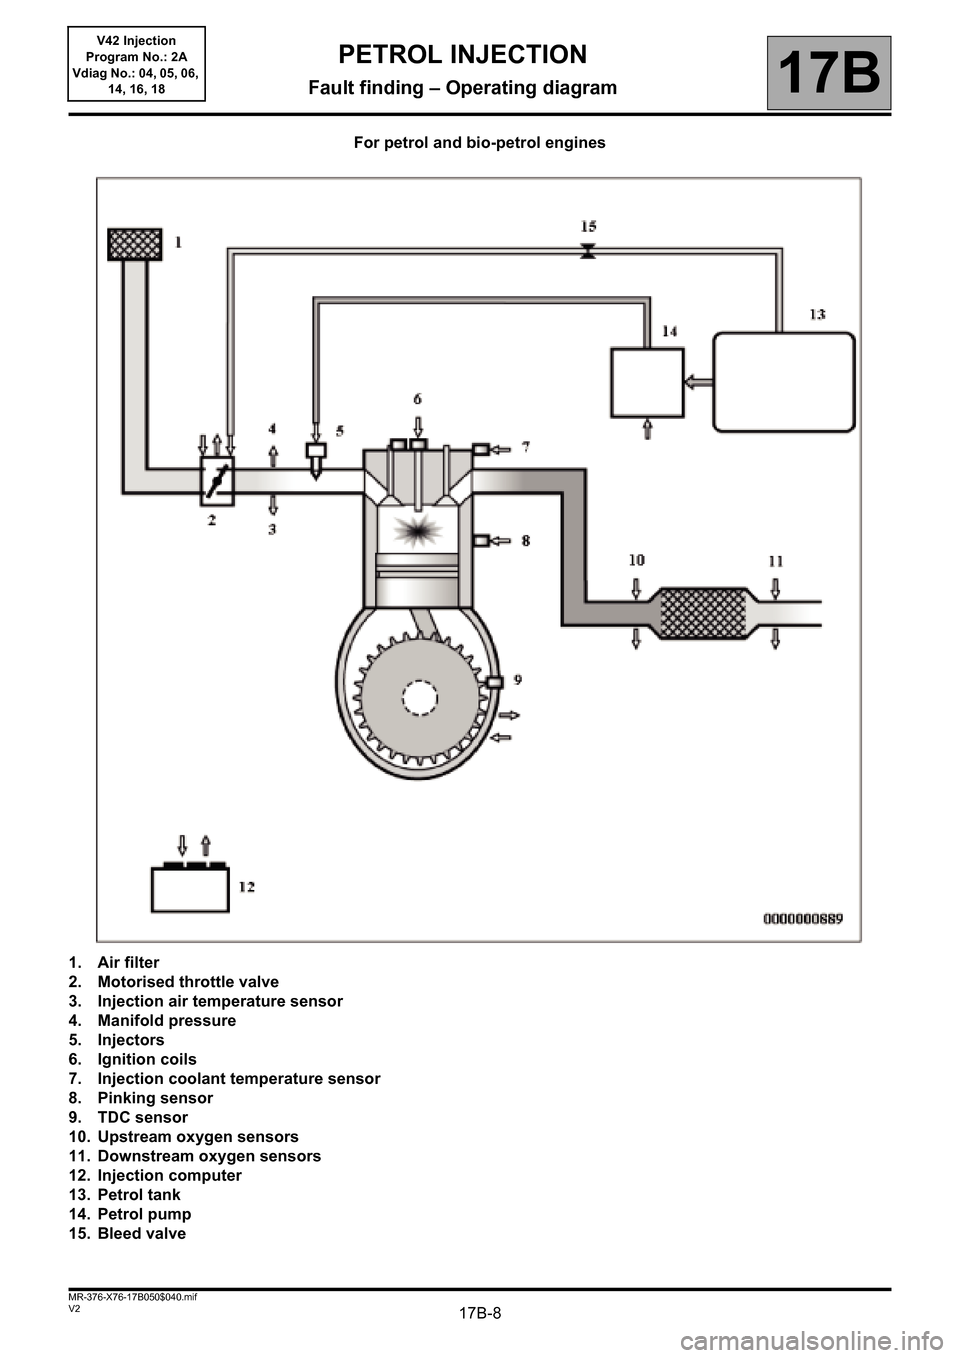 RENAULT KANGOO 2013 X61 / 2.G Petrol V42 Injection Workshop Manual 17B-8V2 MR-376-X76-17B050$040.mif
PETROL INJECTION
Fault finding – Operating diagram17B
V42 Injection
Program No.: 2A
Vdiag No.: 04, 05, 06, 
14, 16, 18
For petrol and bio-petrol engines
1. Air filt